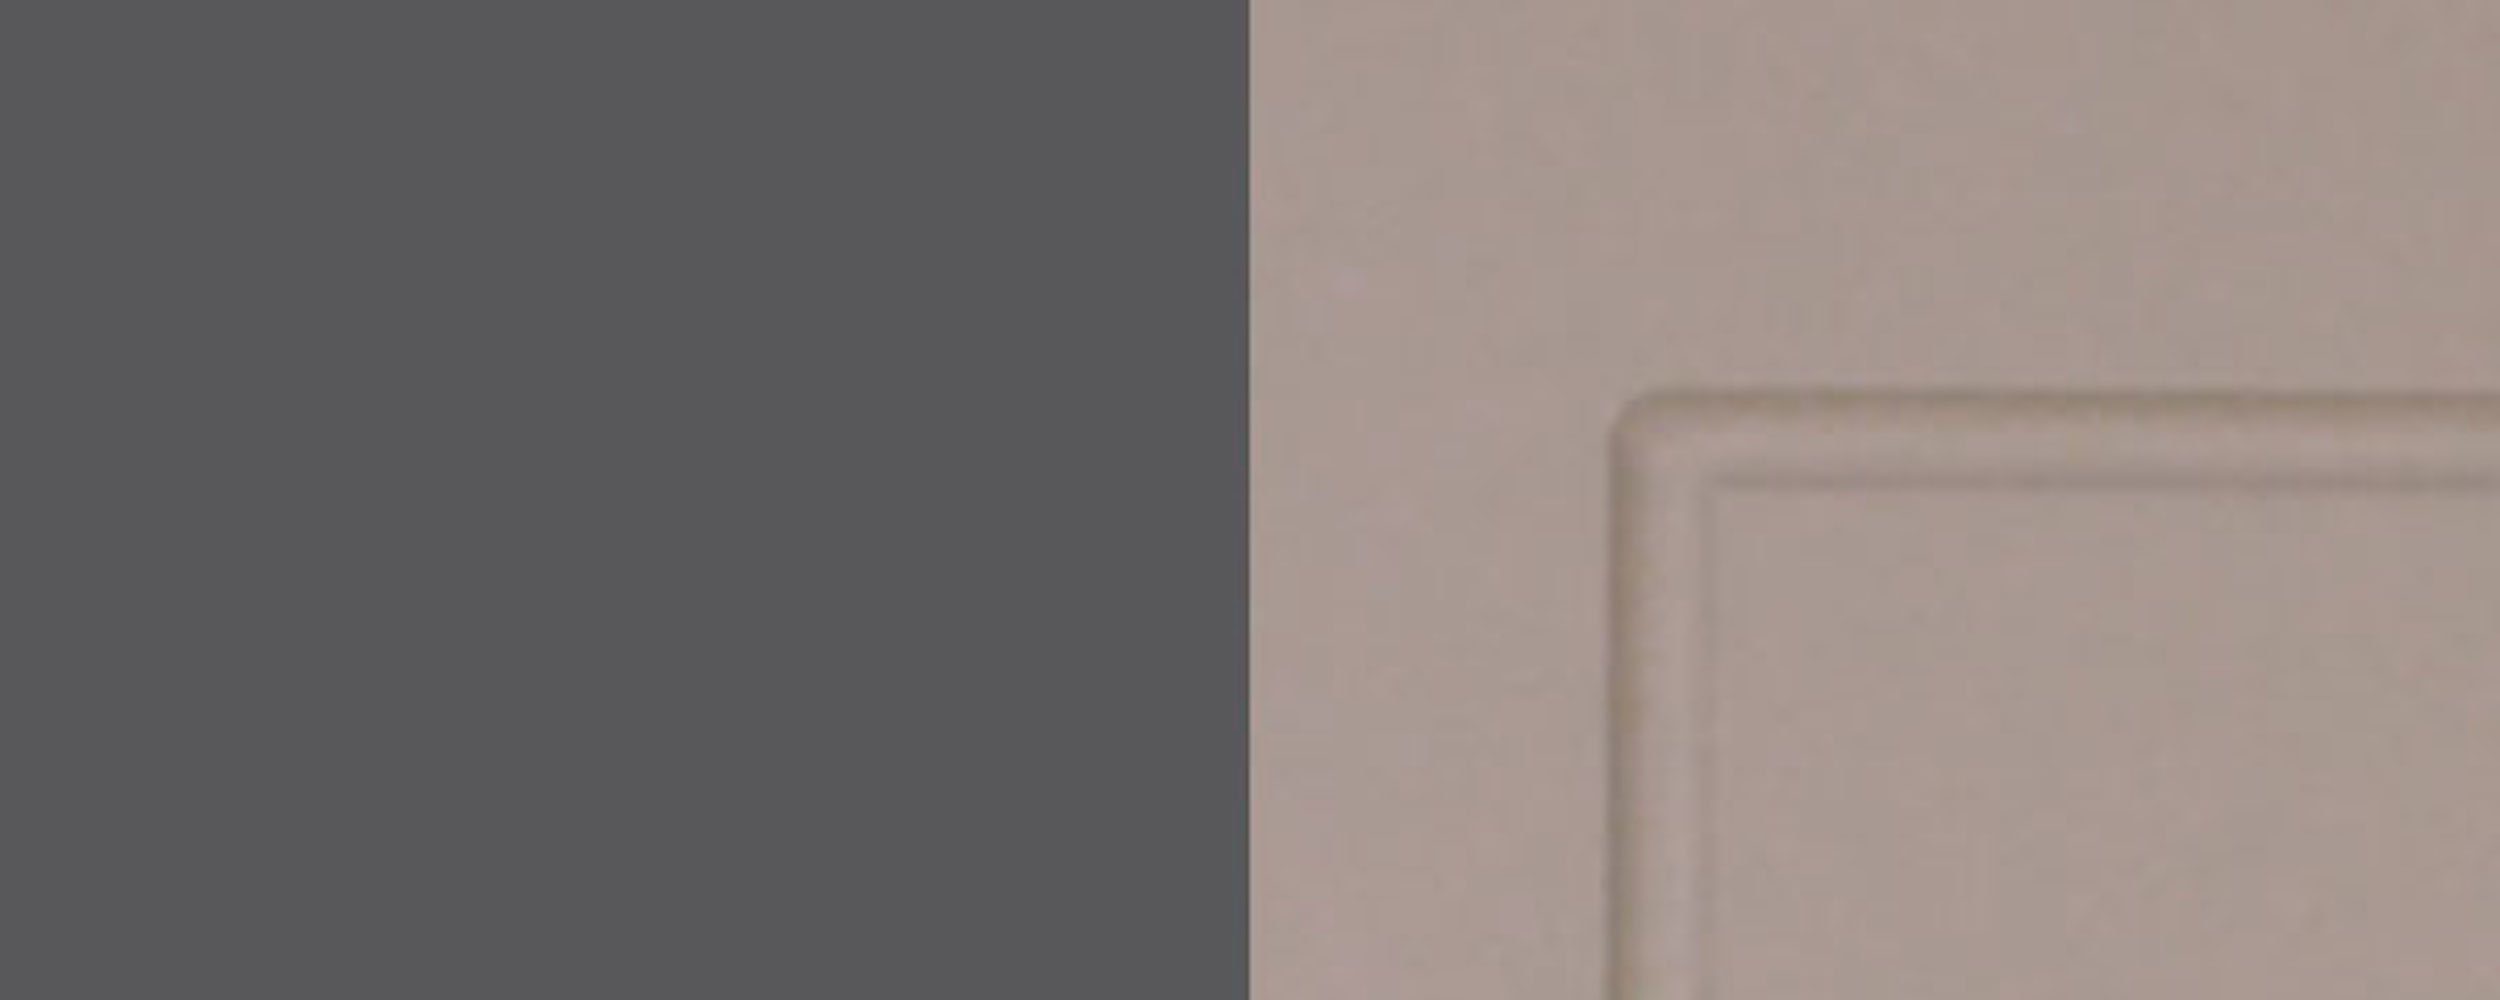 Korpusfarbe (Kvantum) Kvantum beige 2-türig Klapphängeschrank wählbar matt 60cm und Feldmann-Wohnen Front-